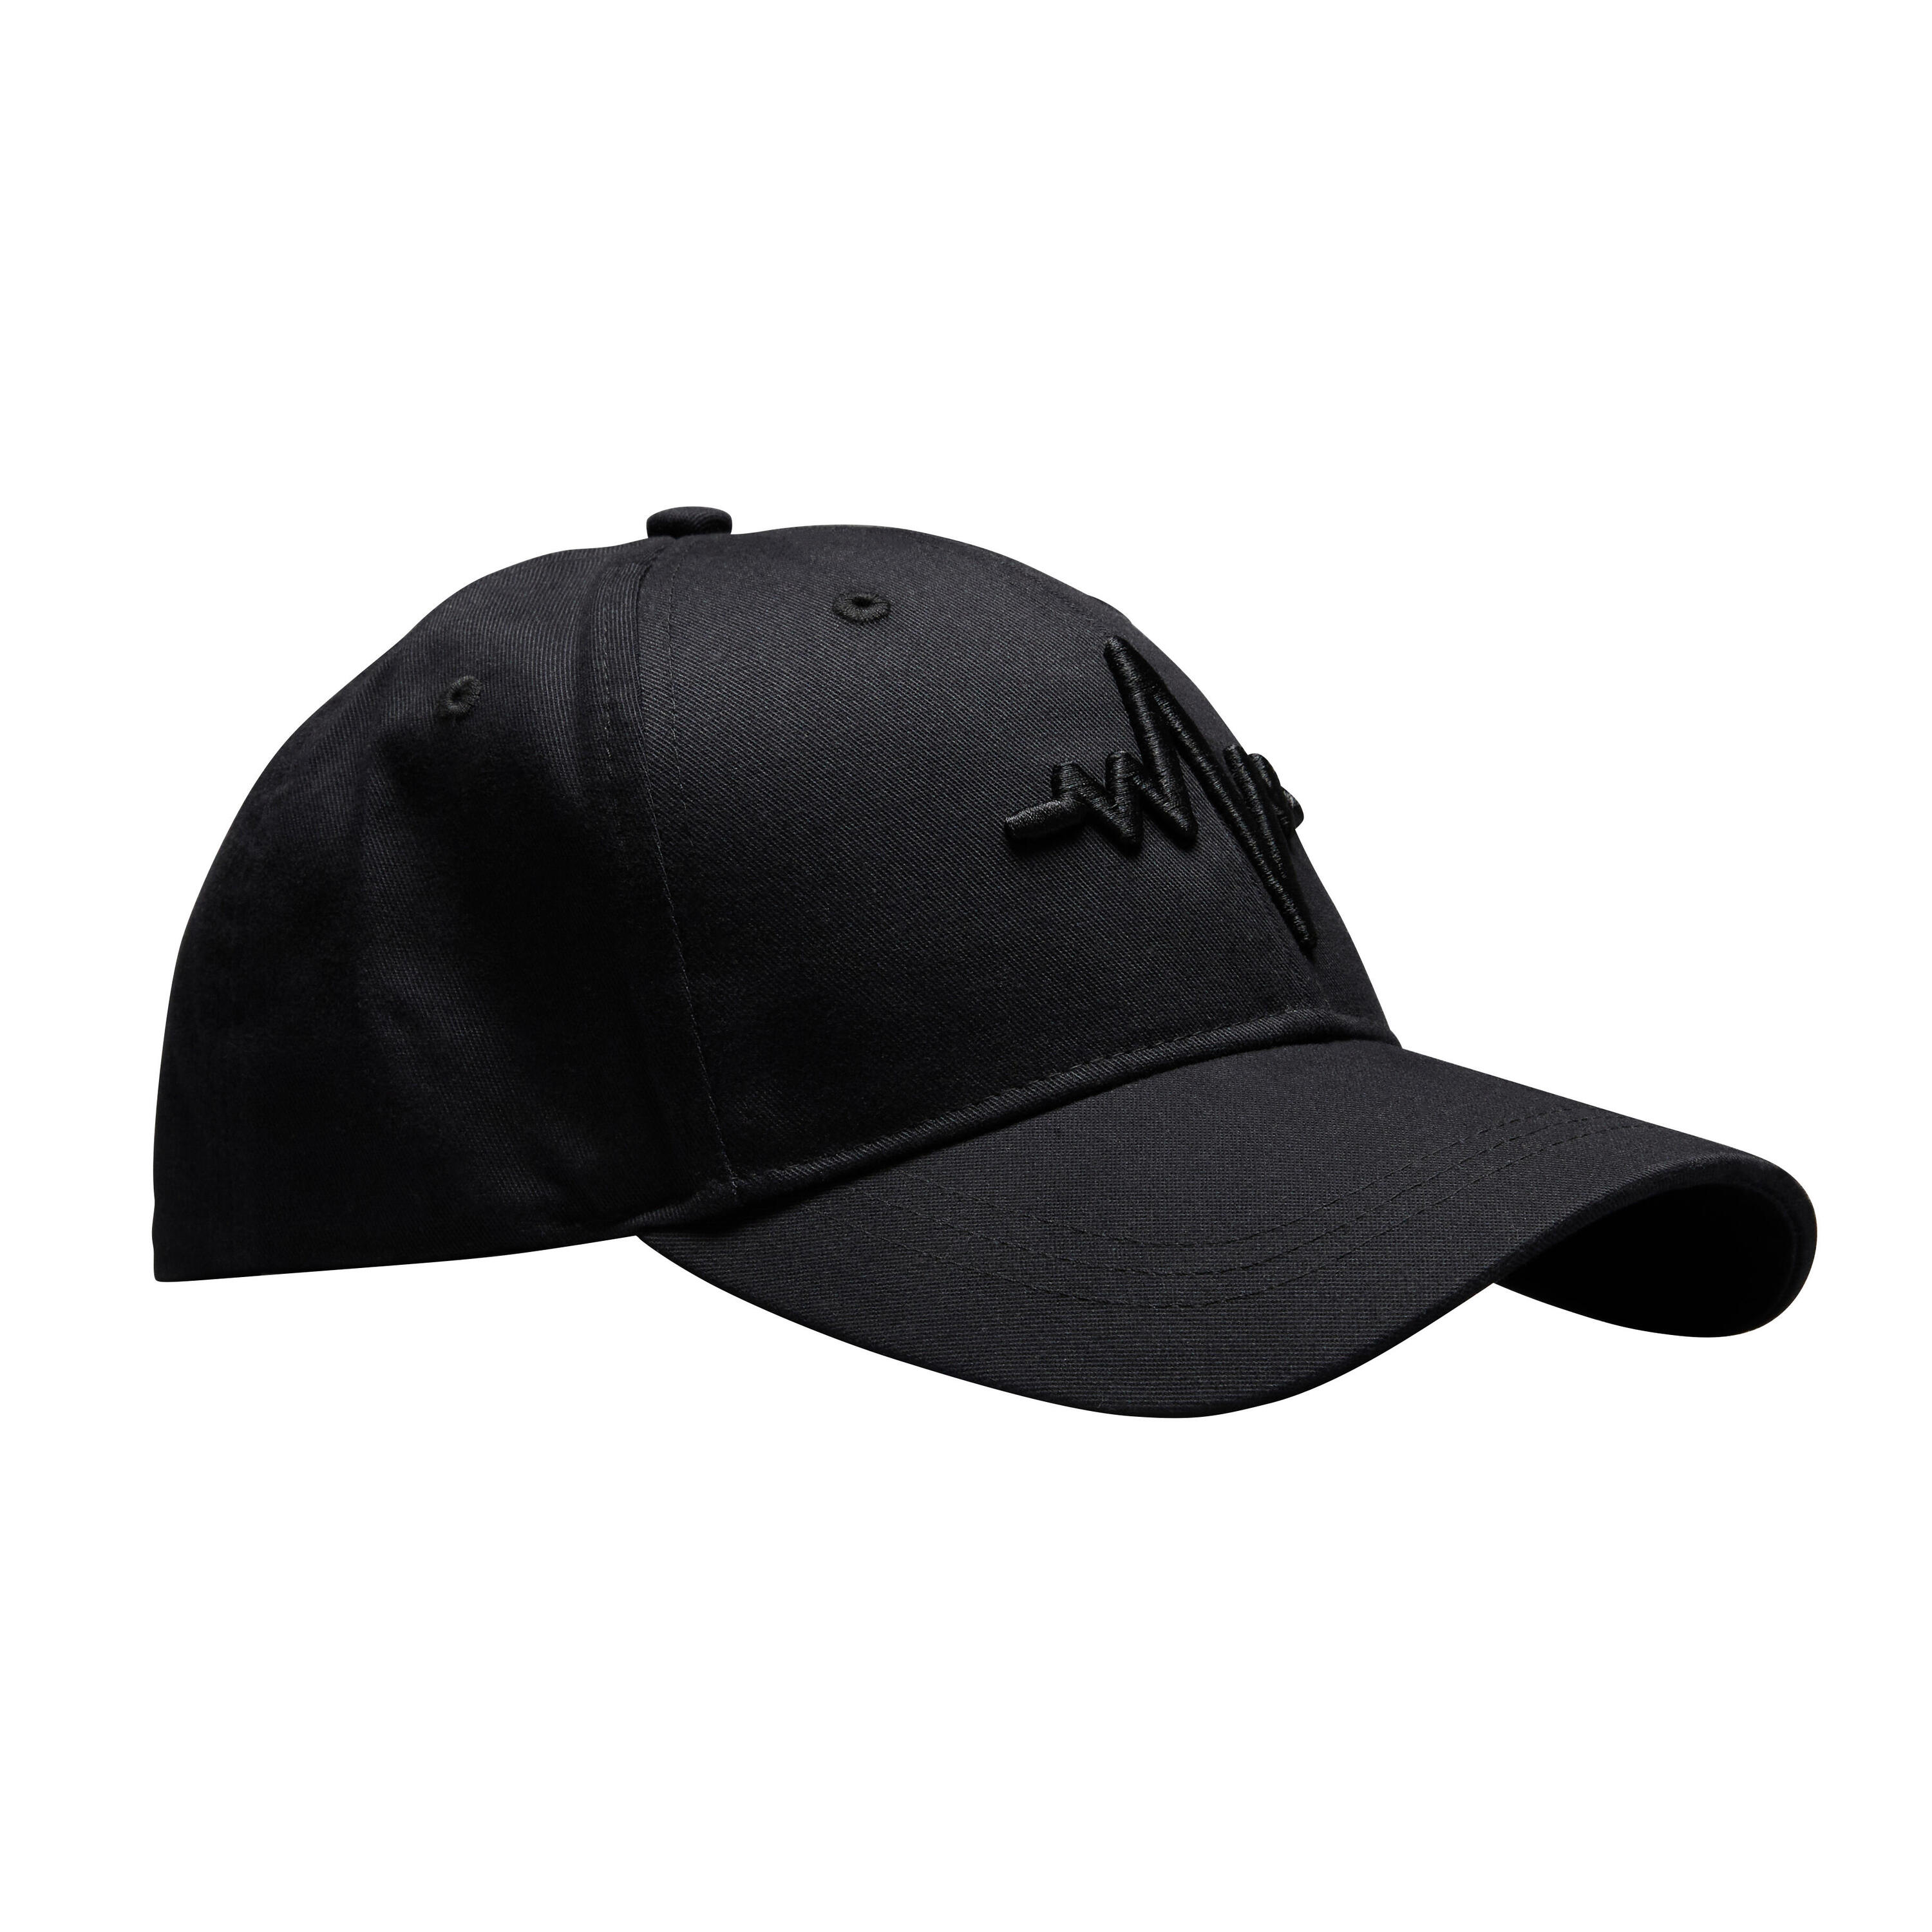 Fitness Cap - Black 1/8